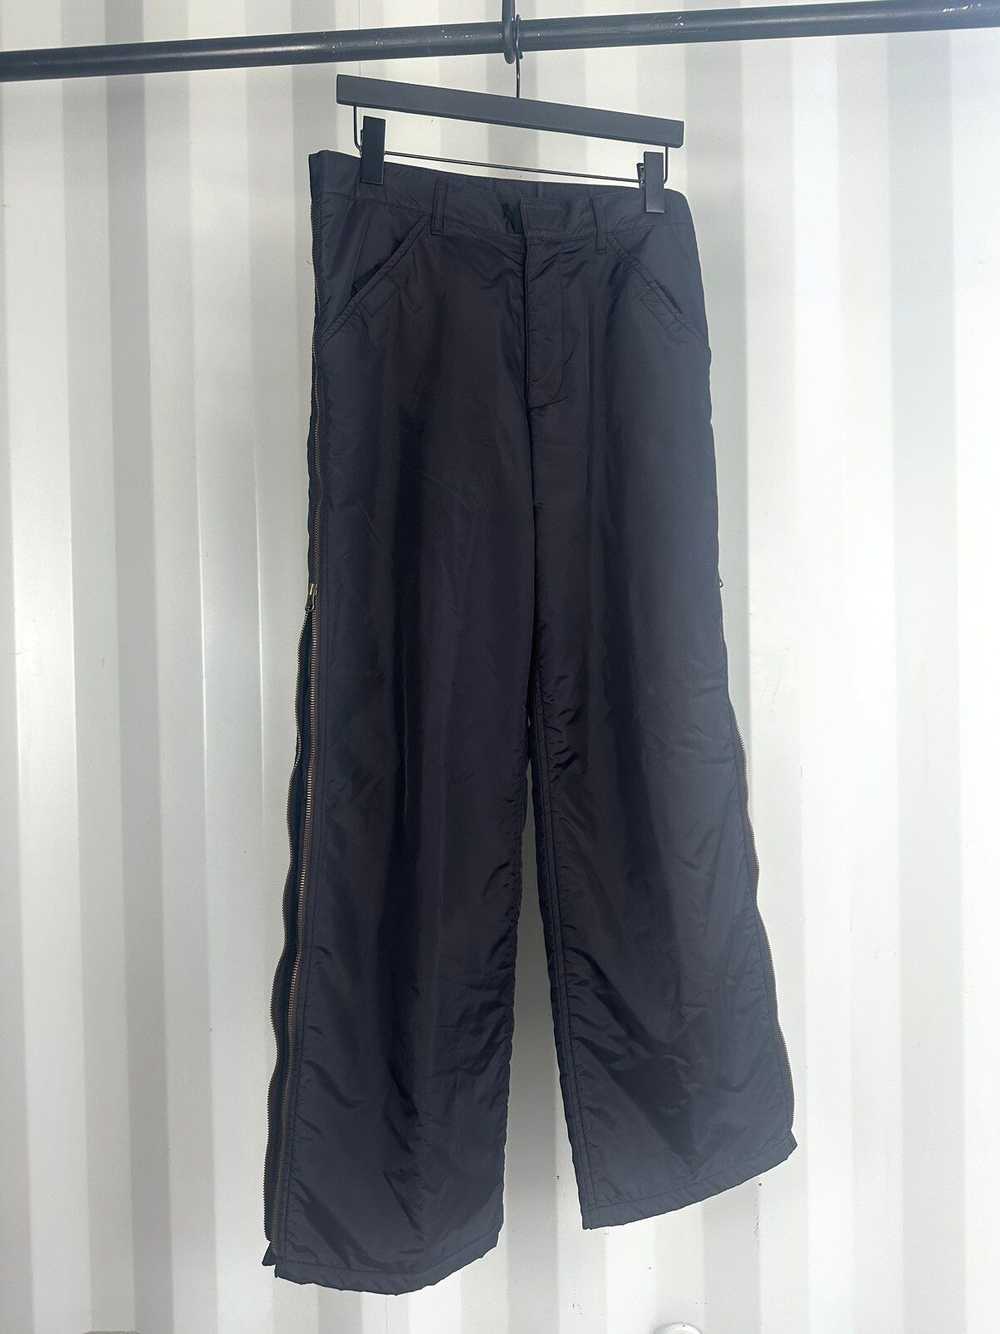 Jean Paul Gaultier Nylon Insulated Side Zip Pants - image 1